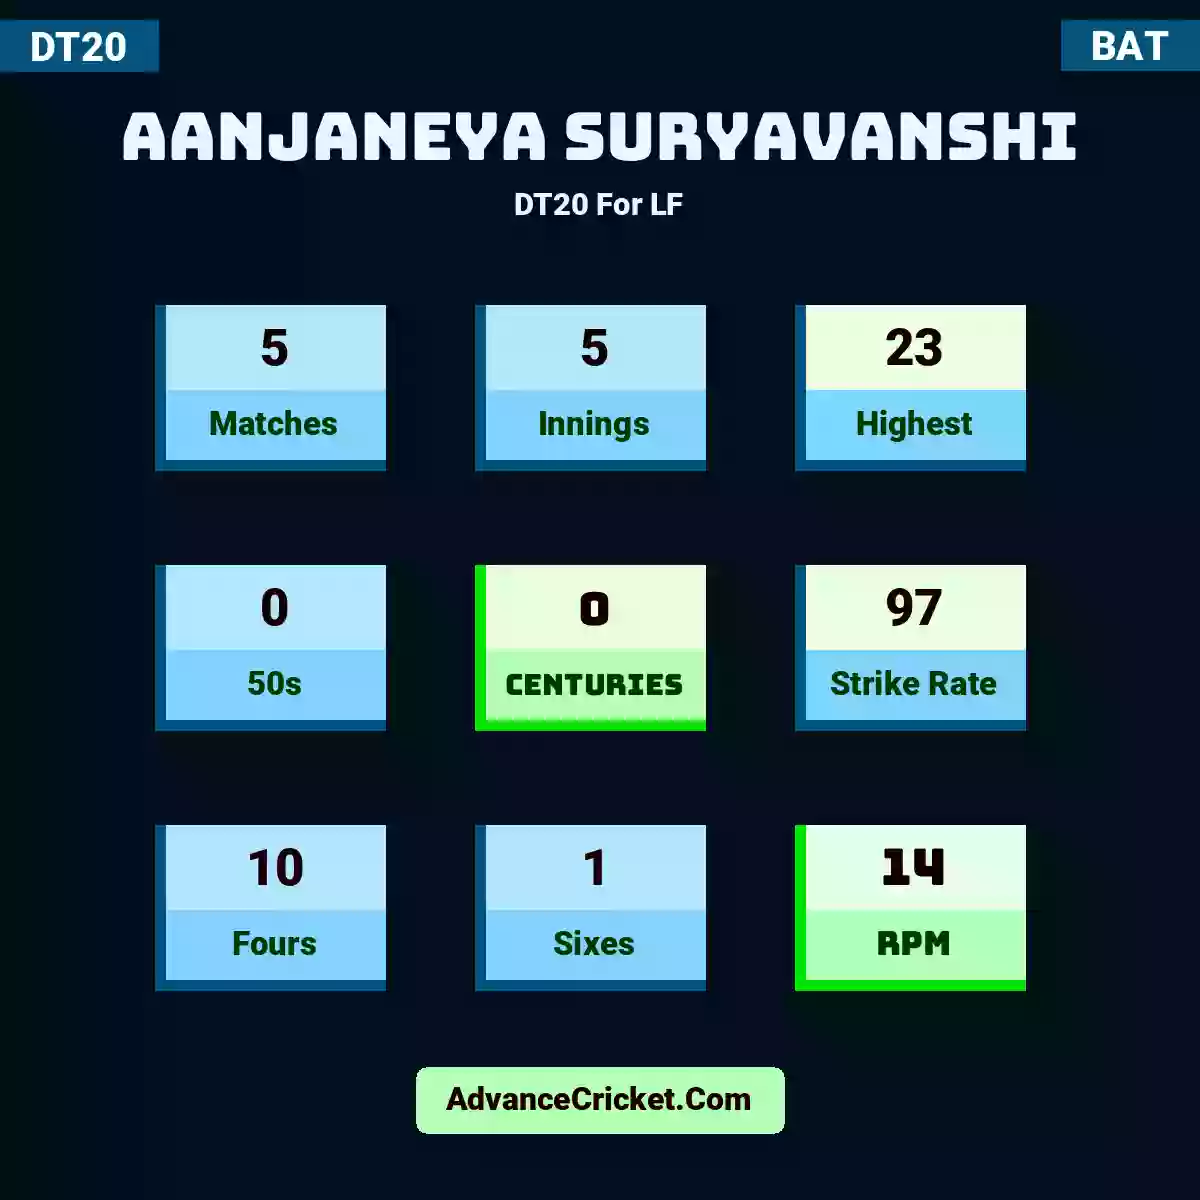 Aanjaneya Suryavanshi DT20  For LF, Aanjaneya Suryavanshi played 5 matches, scored 23 runs as highest, 0 half-centuries, and 0 centuries, with a strike rate of 97. A.Suryavanshi hit 10 fours and 1 sixes, with an RPM of 14.